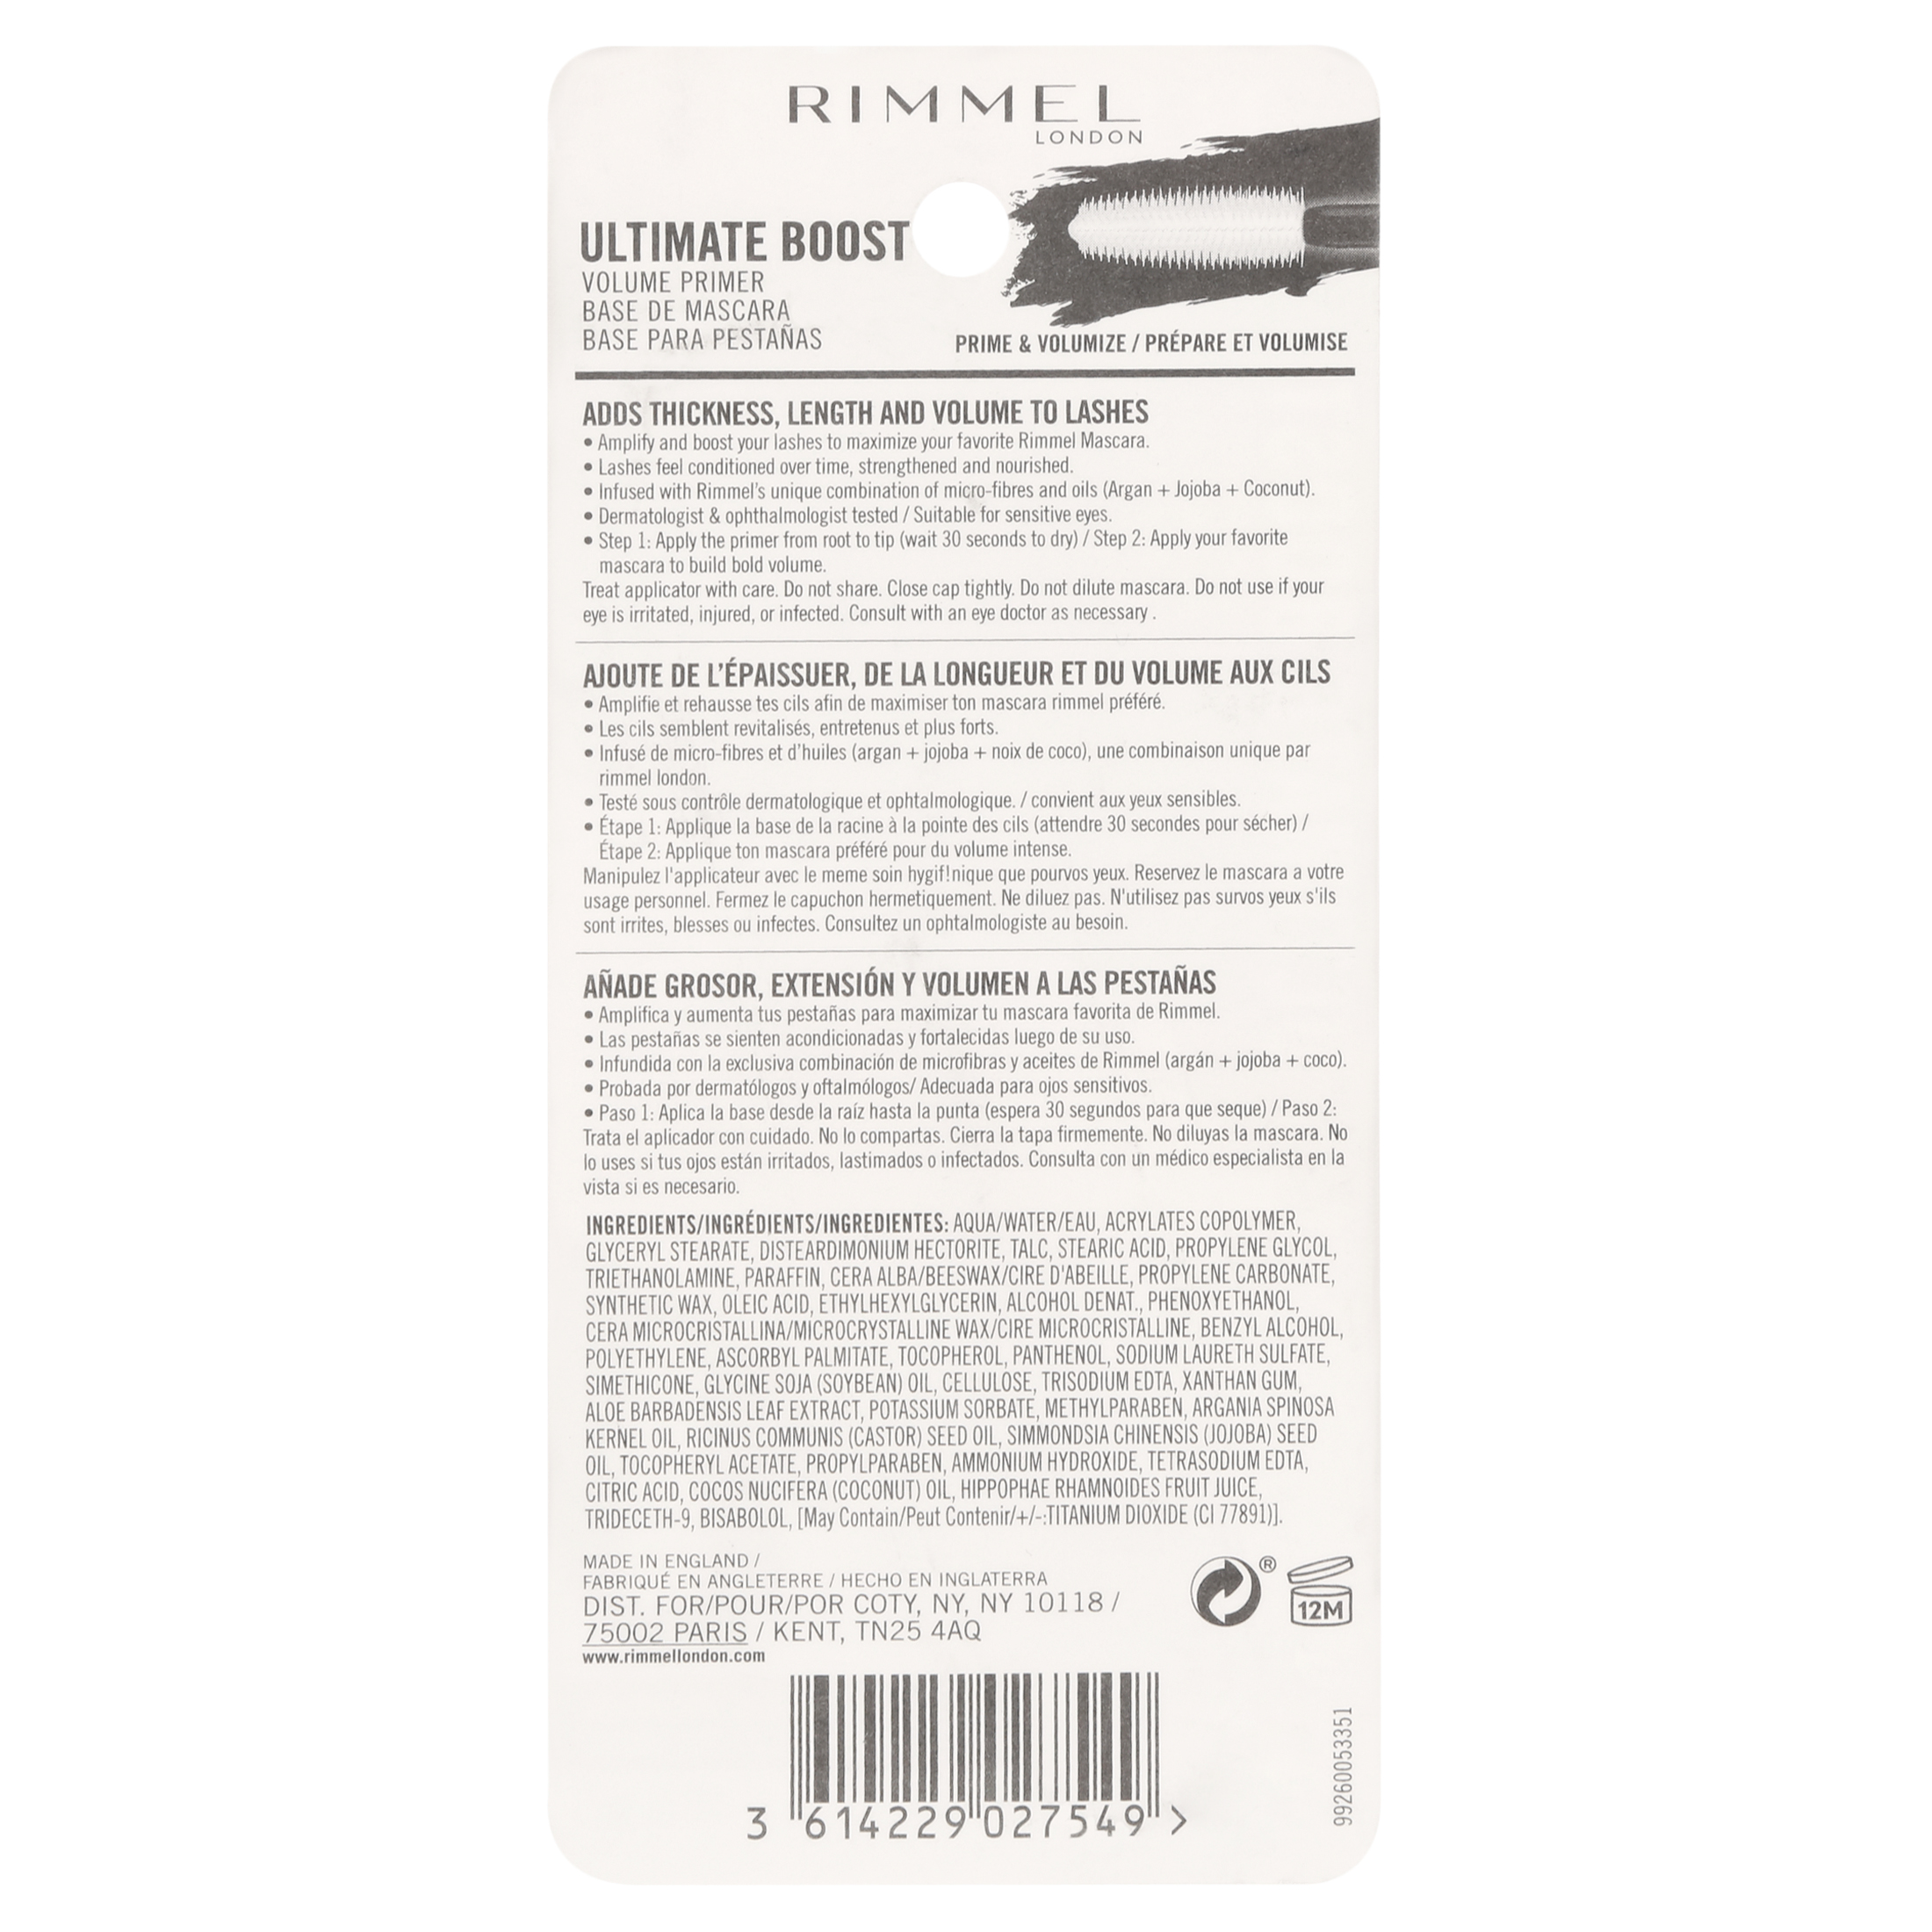 Rimmel Ultimate Boost Volume Primer, 001 White, 0.18 oz - image 4 of 7